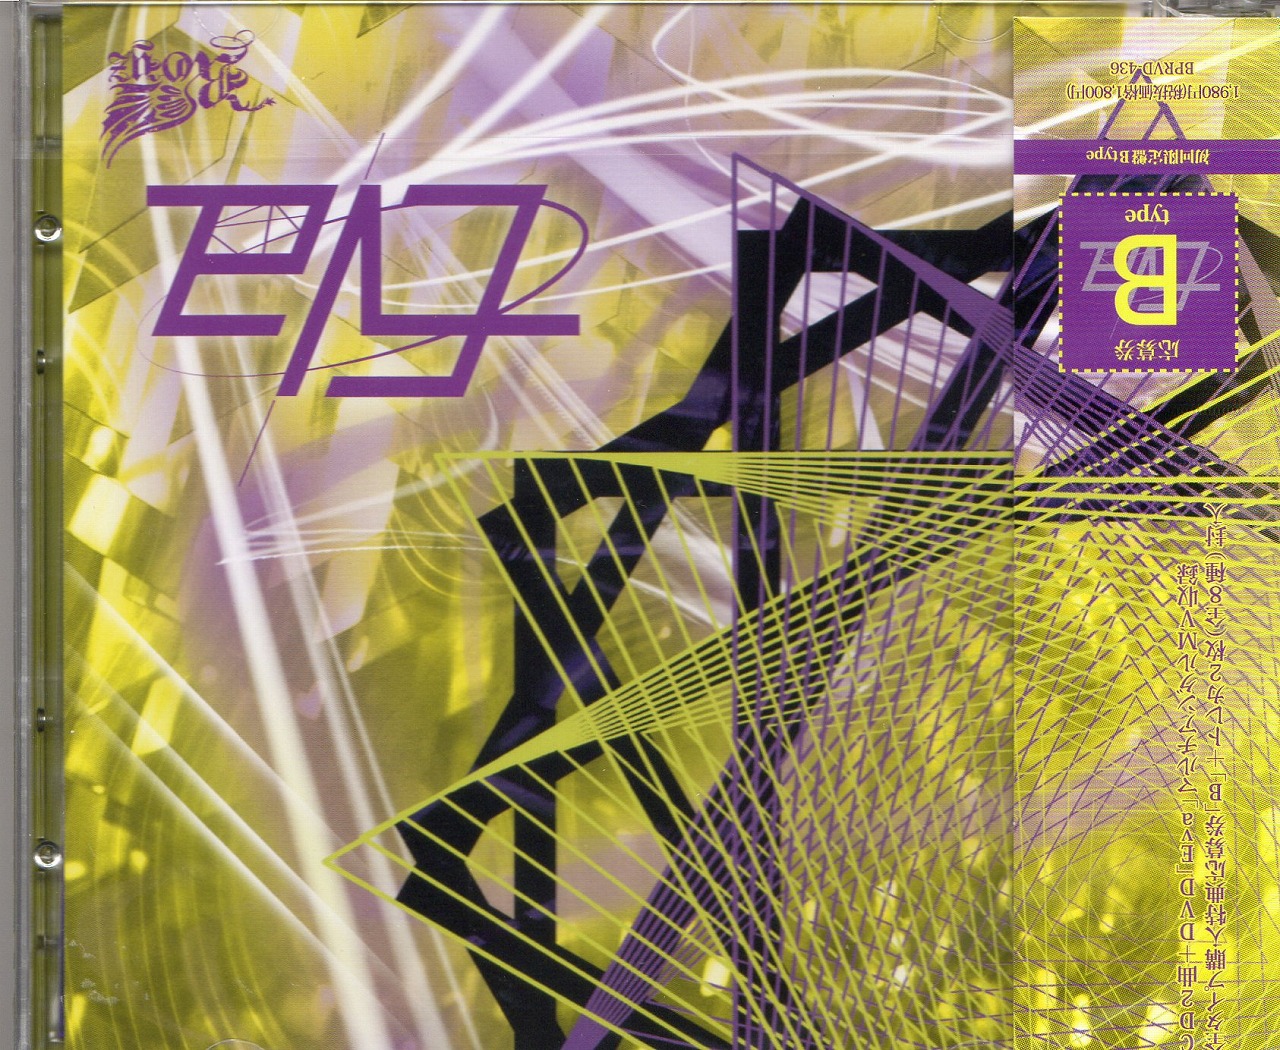 Royz ( ロイズ )  の CD 【B Type】Eva